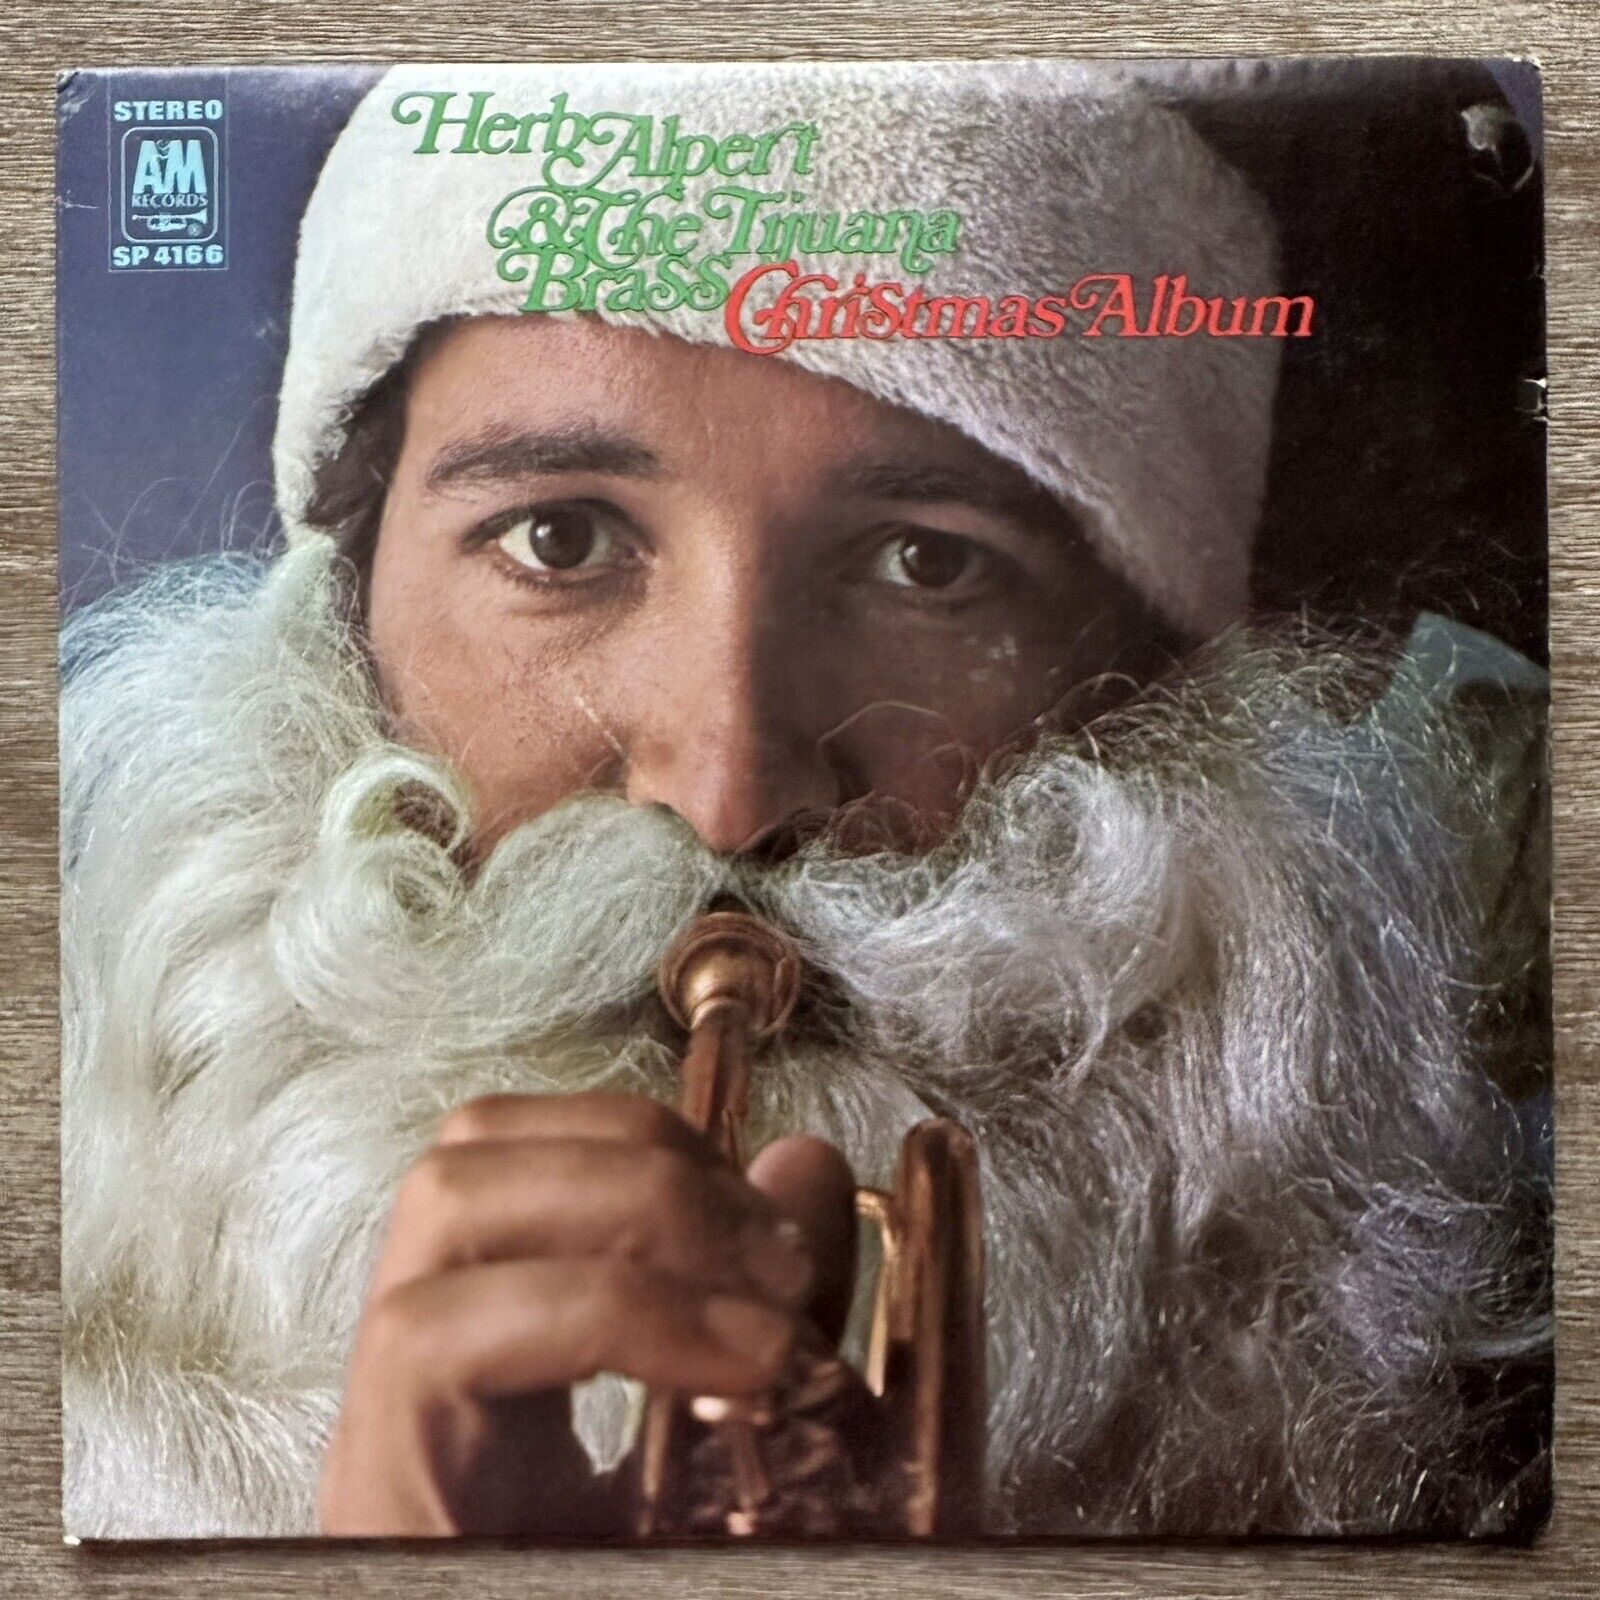 Herb Alpert & The Tijuana Brass Christmas Album - 1968 - A&M SP-4166. Vintage LP